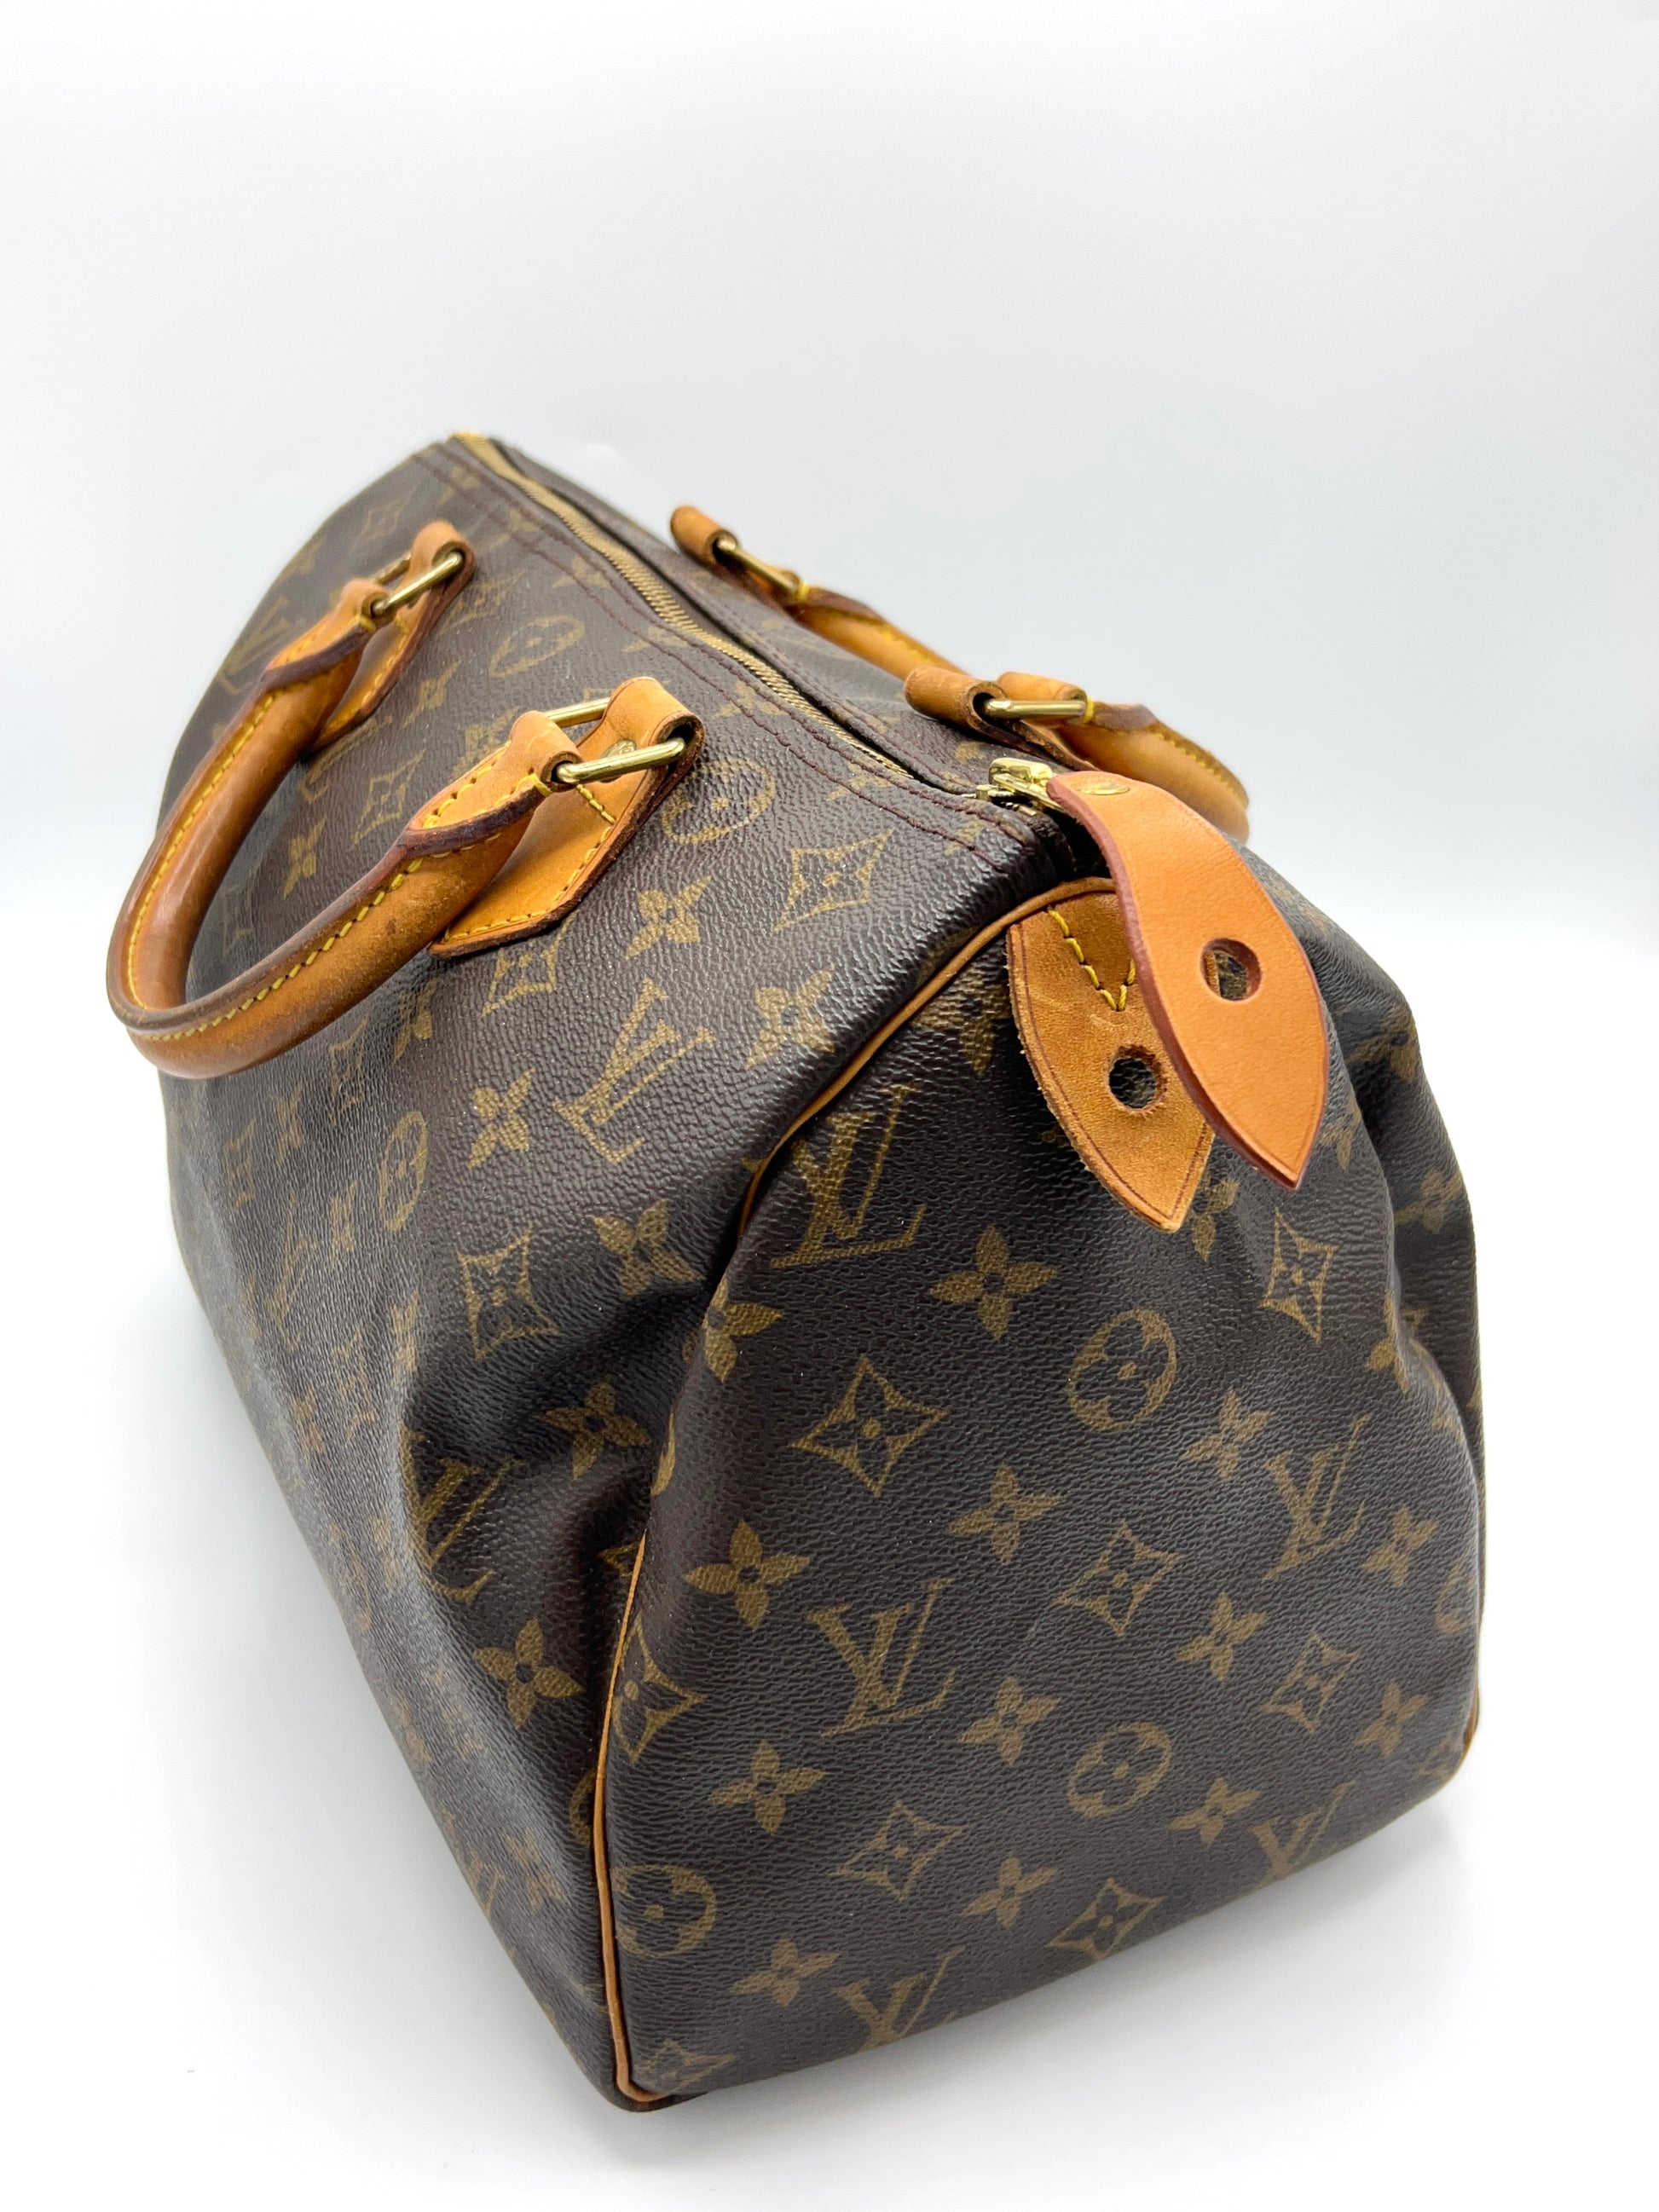 Shop for Louis Vuitton Sienna Brown Epi Leather Speedy 30 cm